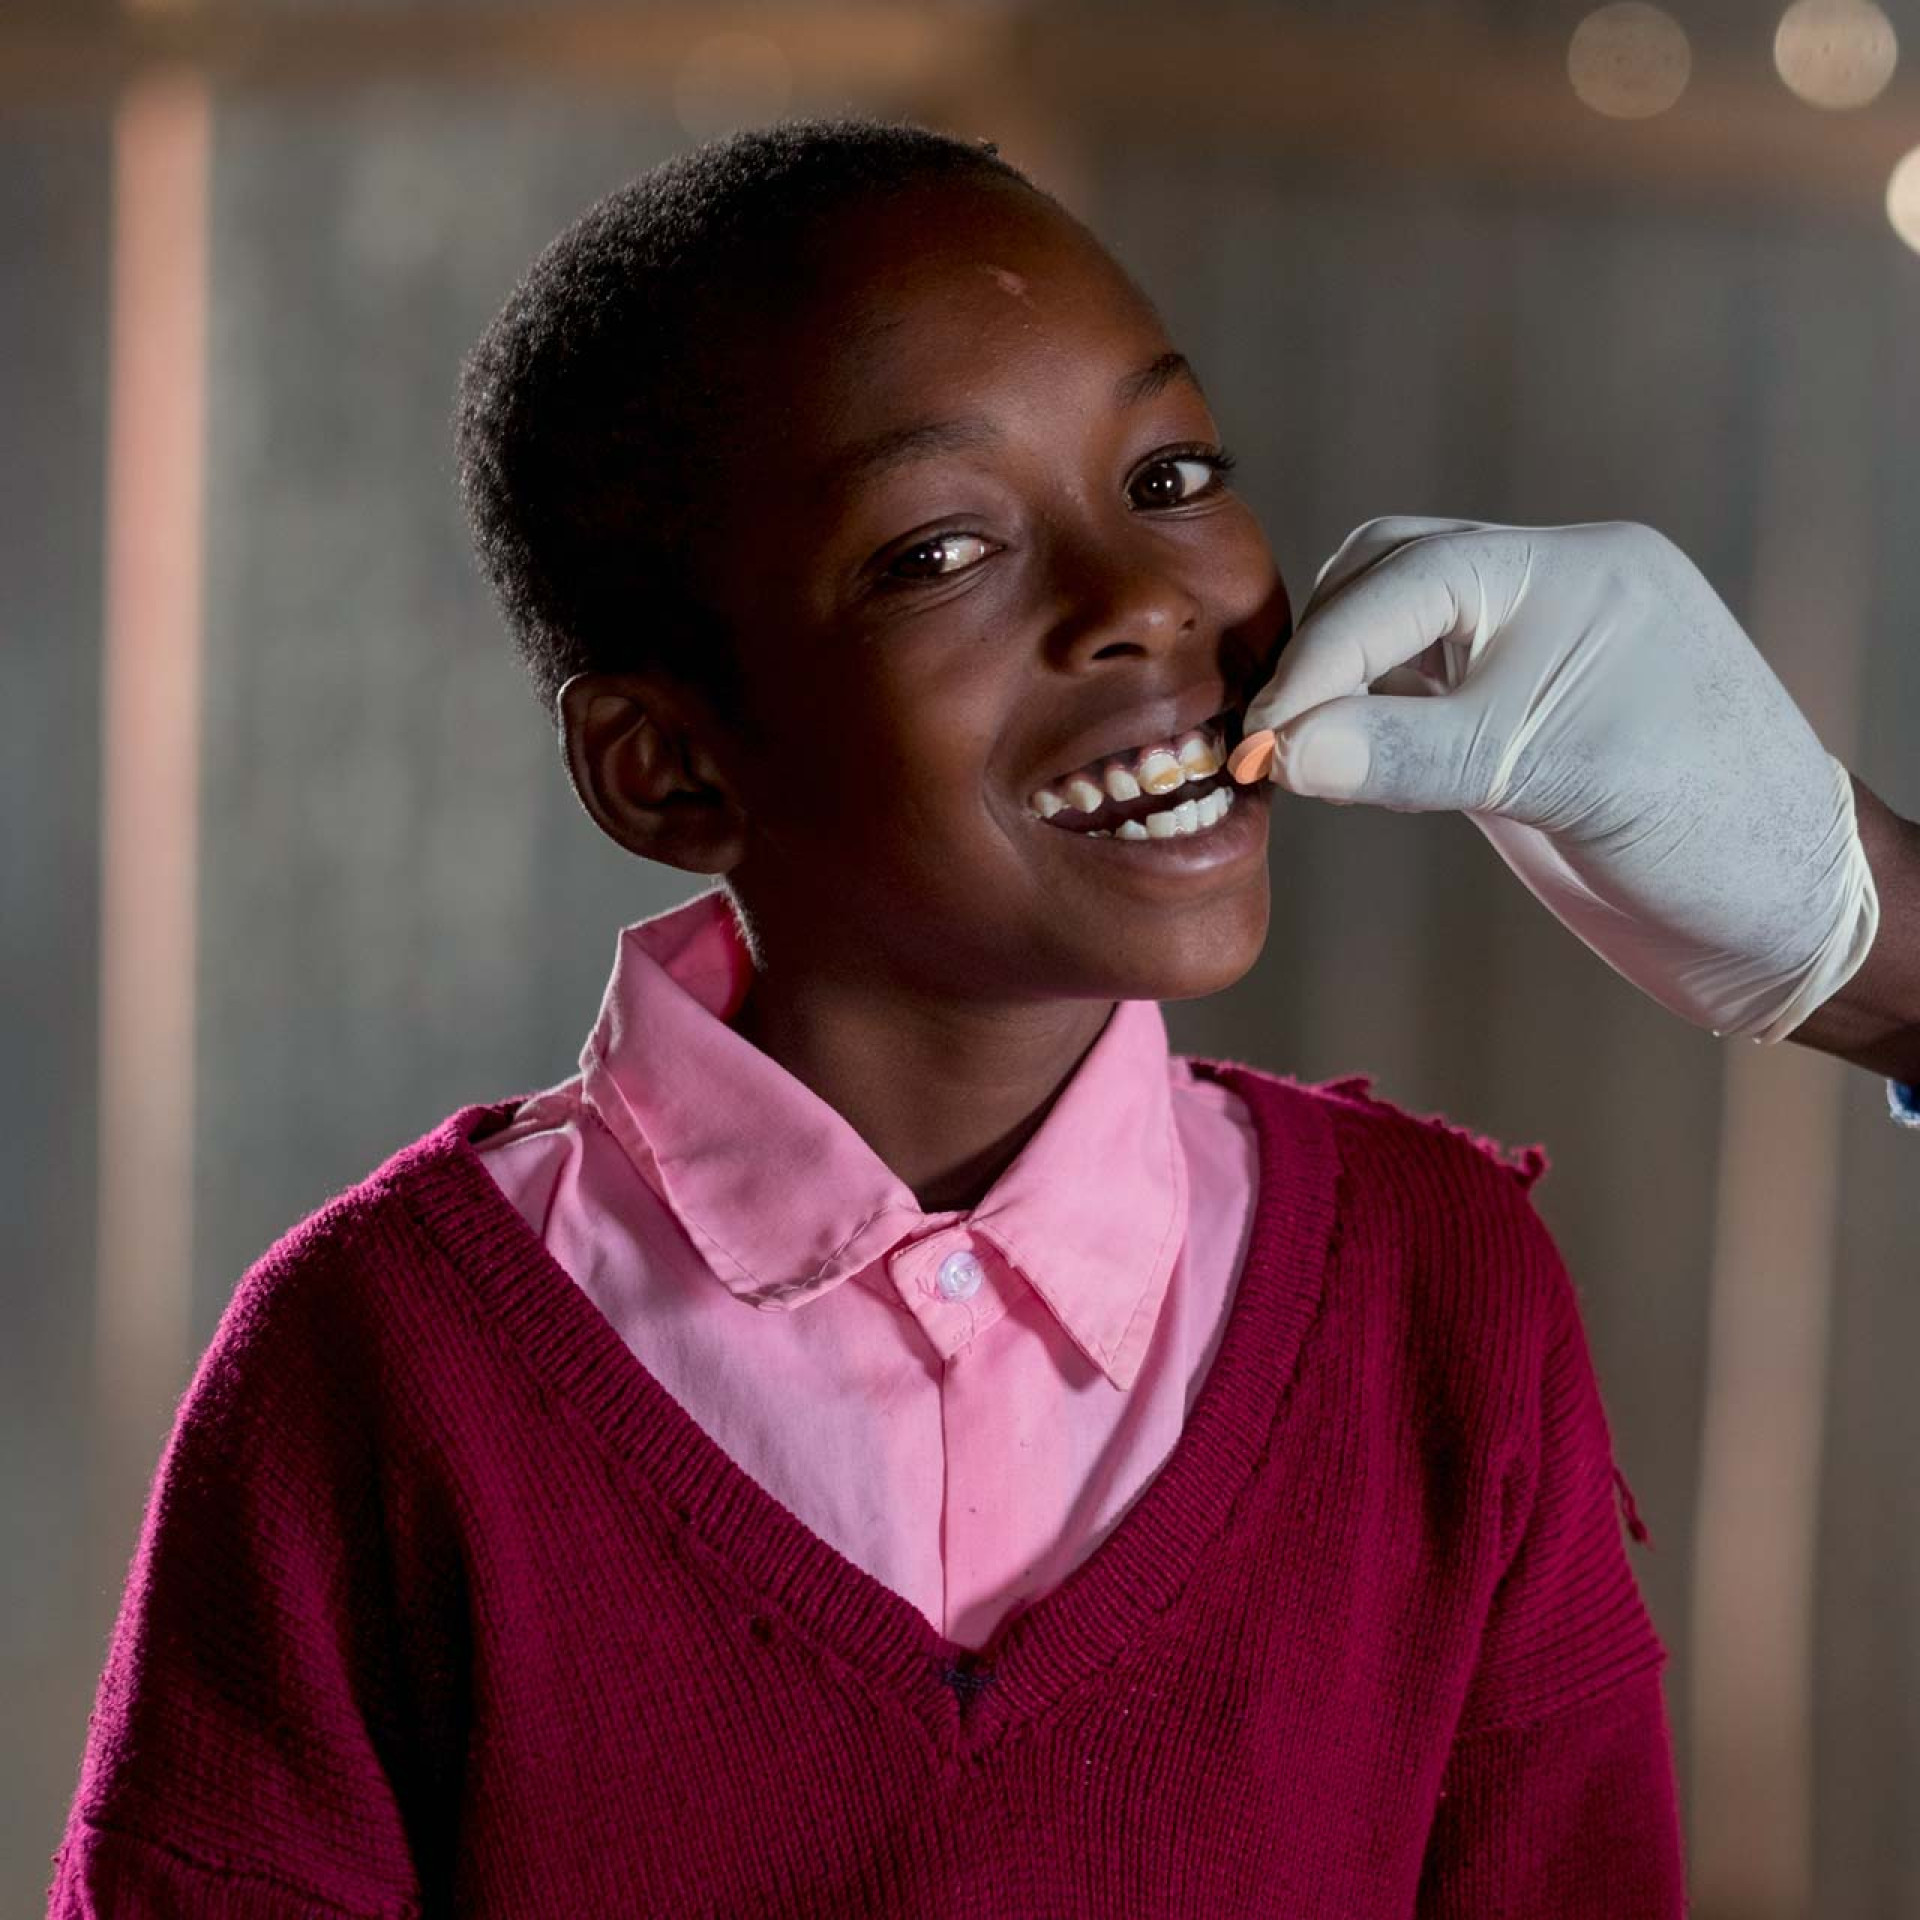 A child receives deworming medicine.